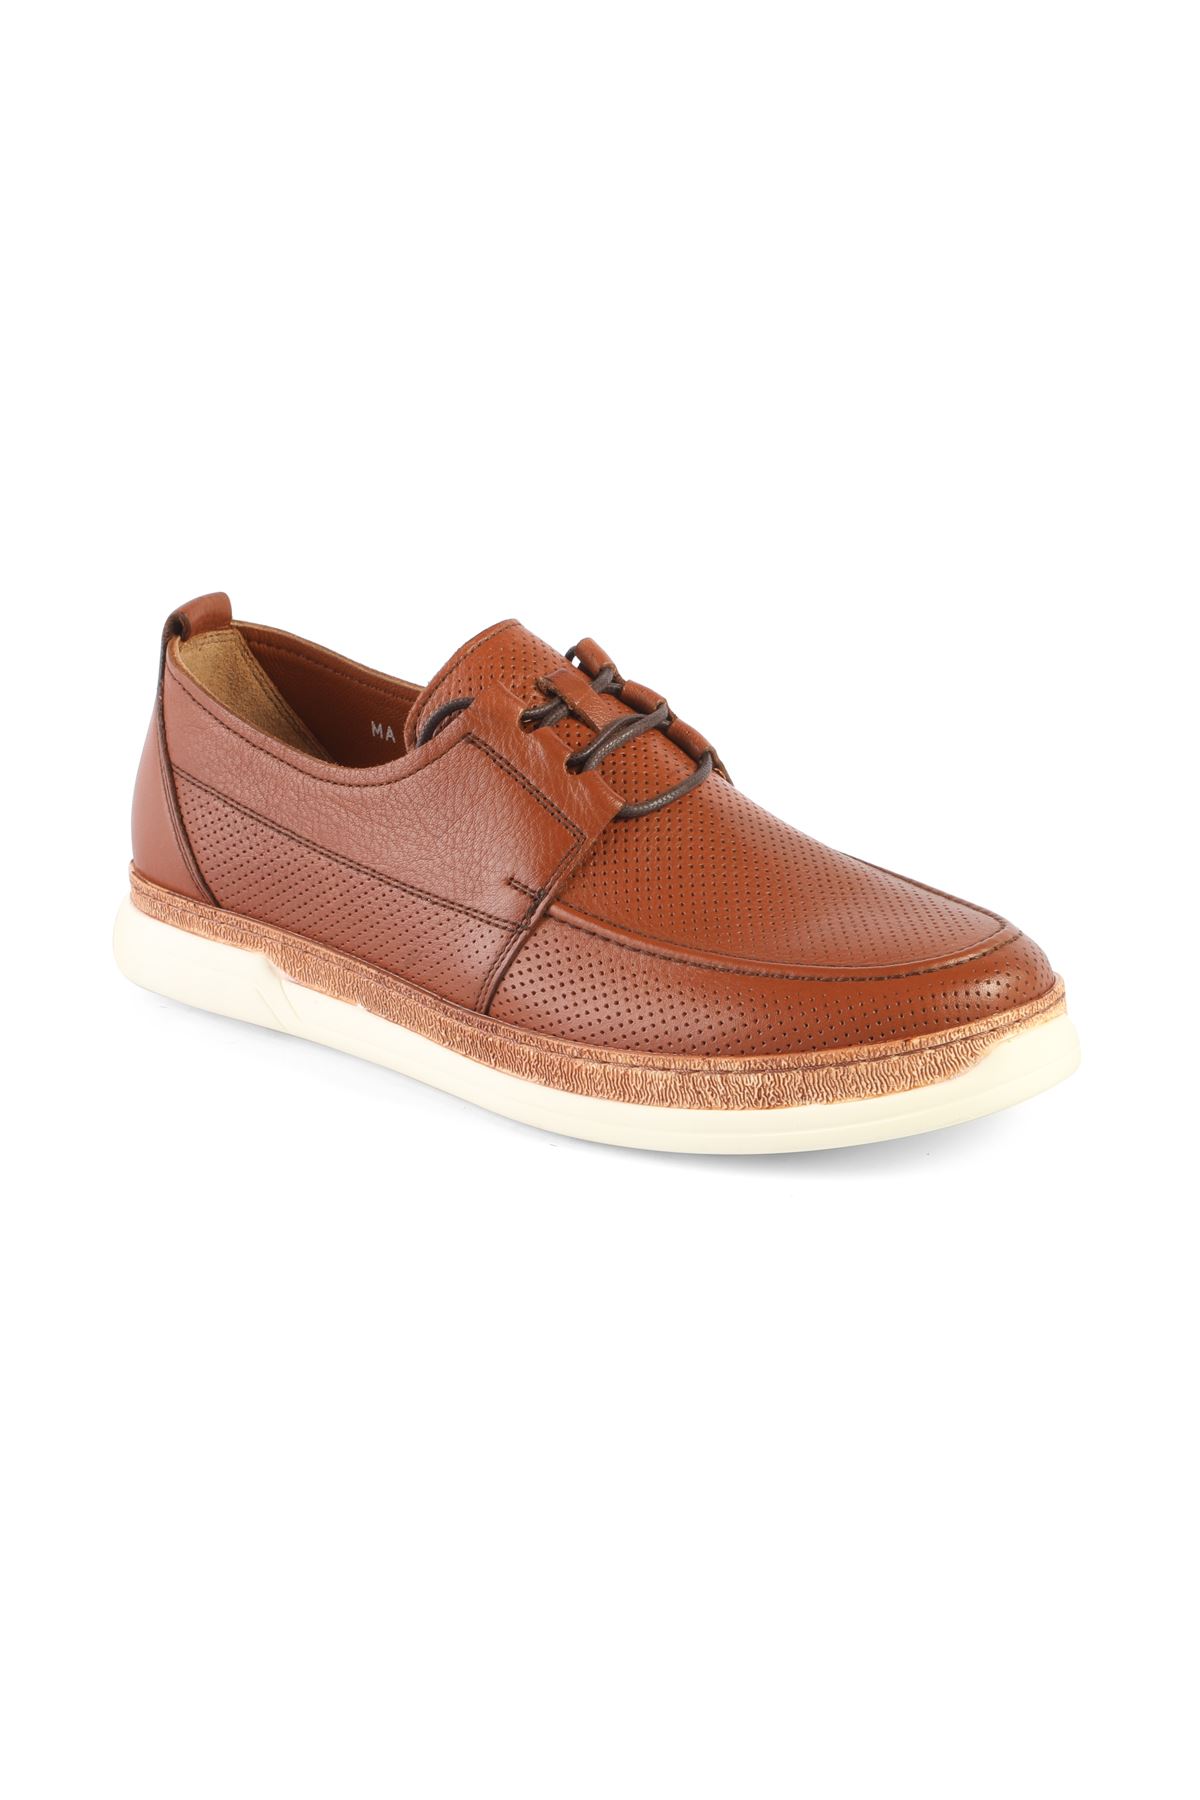 Libero L3418 Tan Loafer Shoes